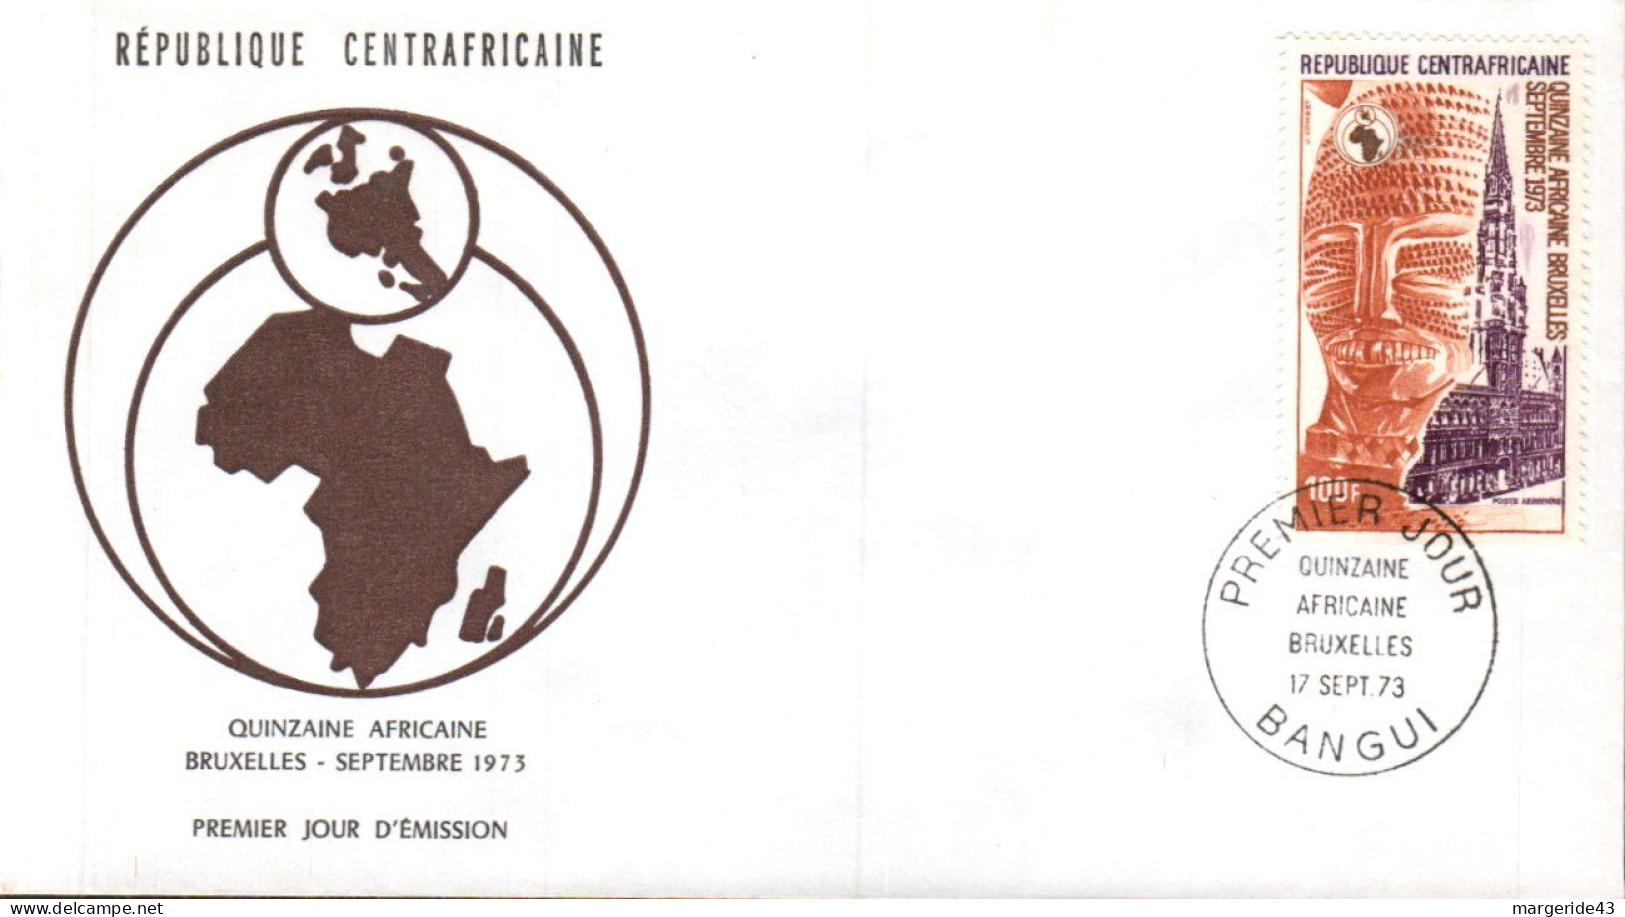 CENTRAFRIQUE FDC 1973 QUINZAINE AFRICAINE BRUXELLES - Central African Republic